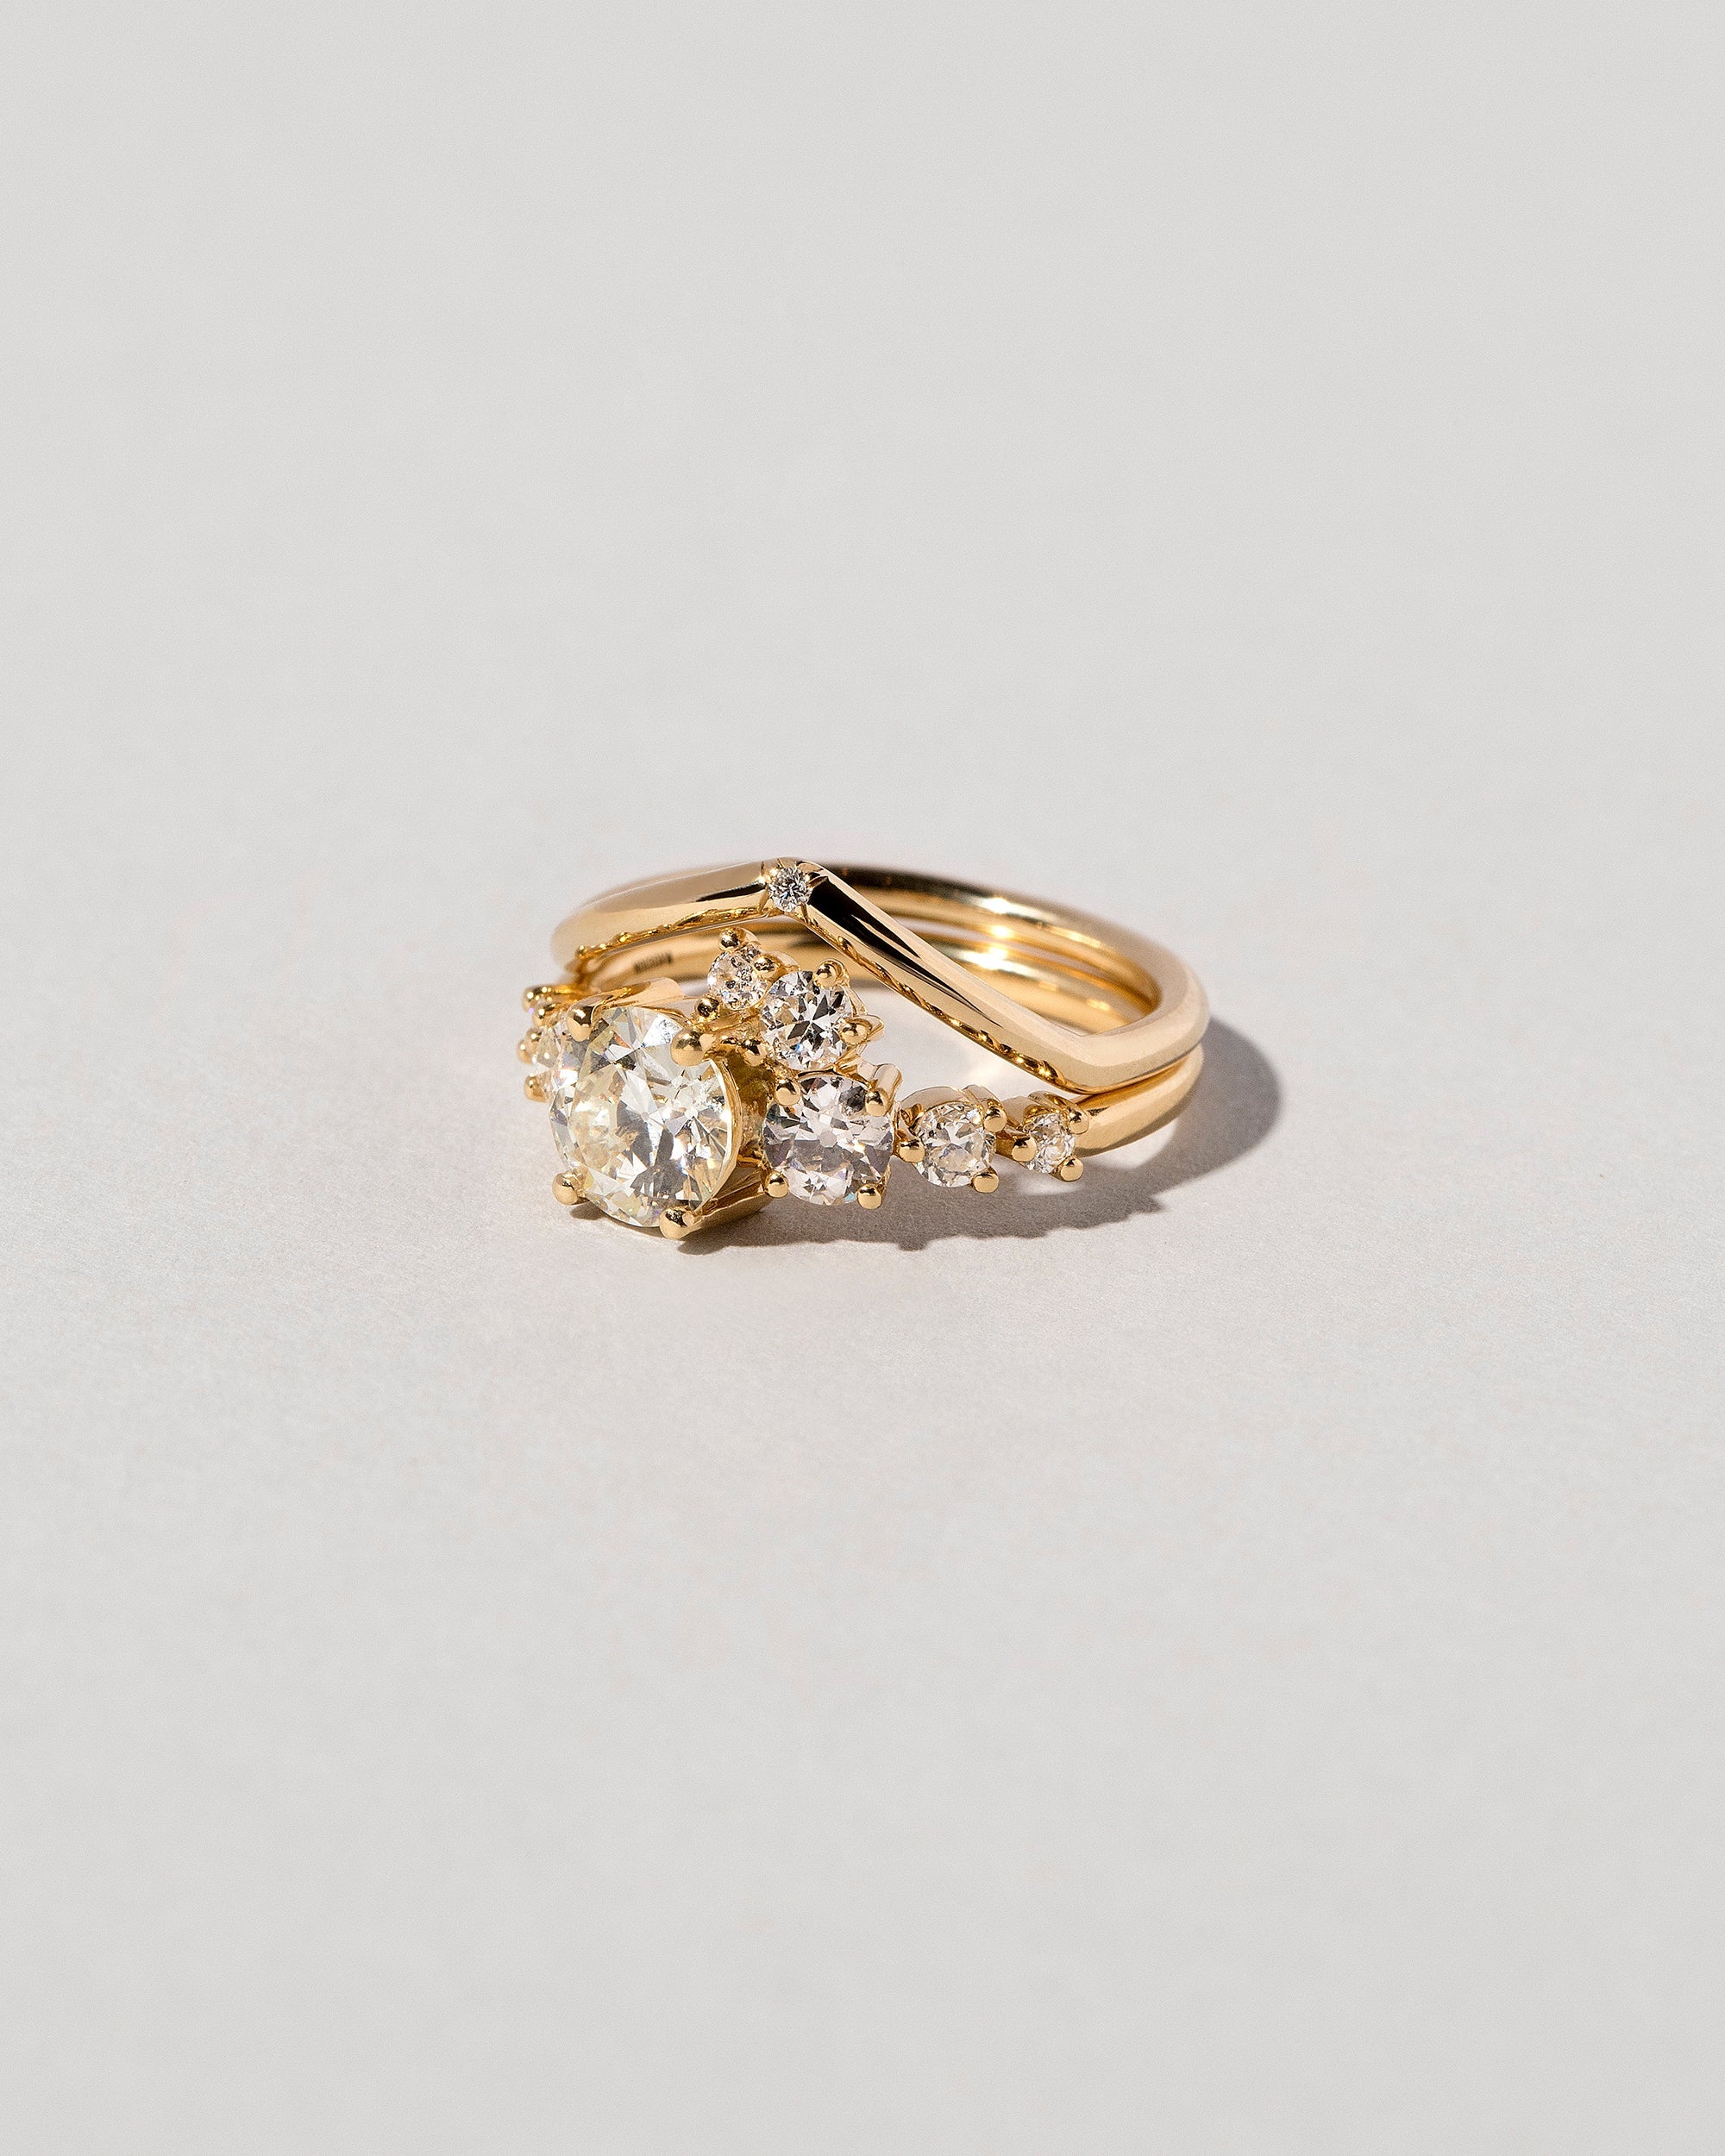 CHLOE 14k Gold Ring - Julez Bryant